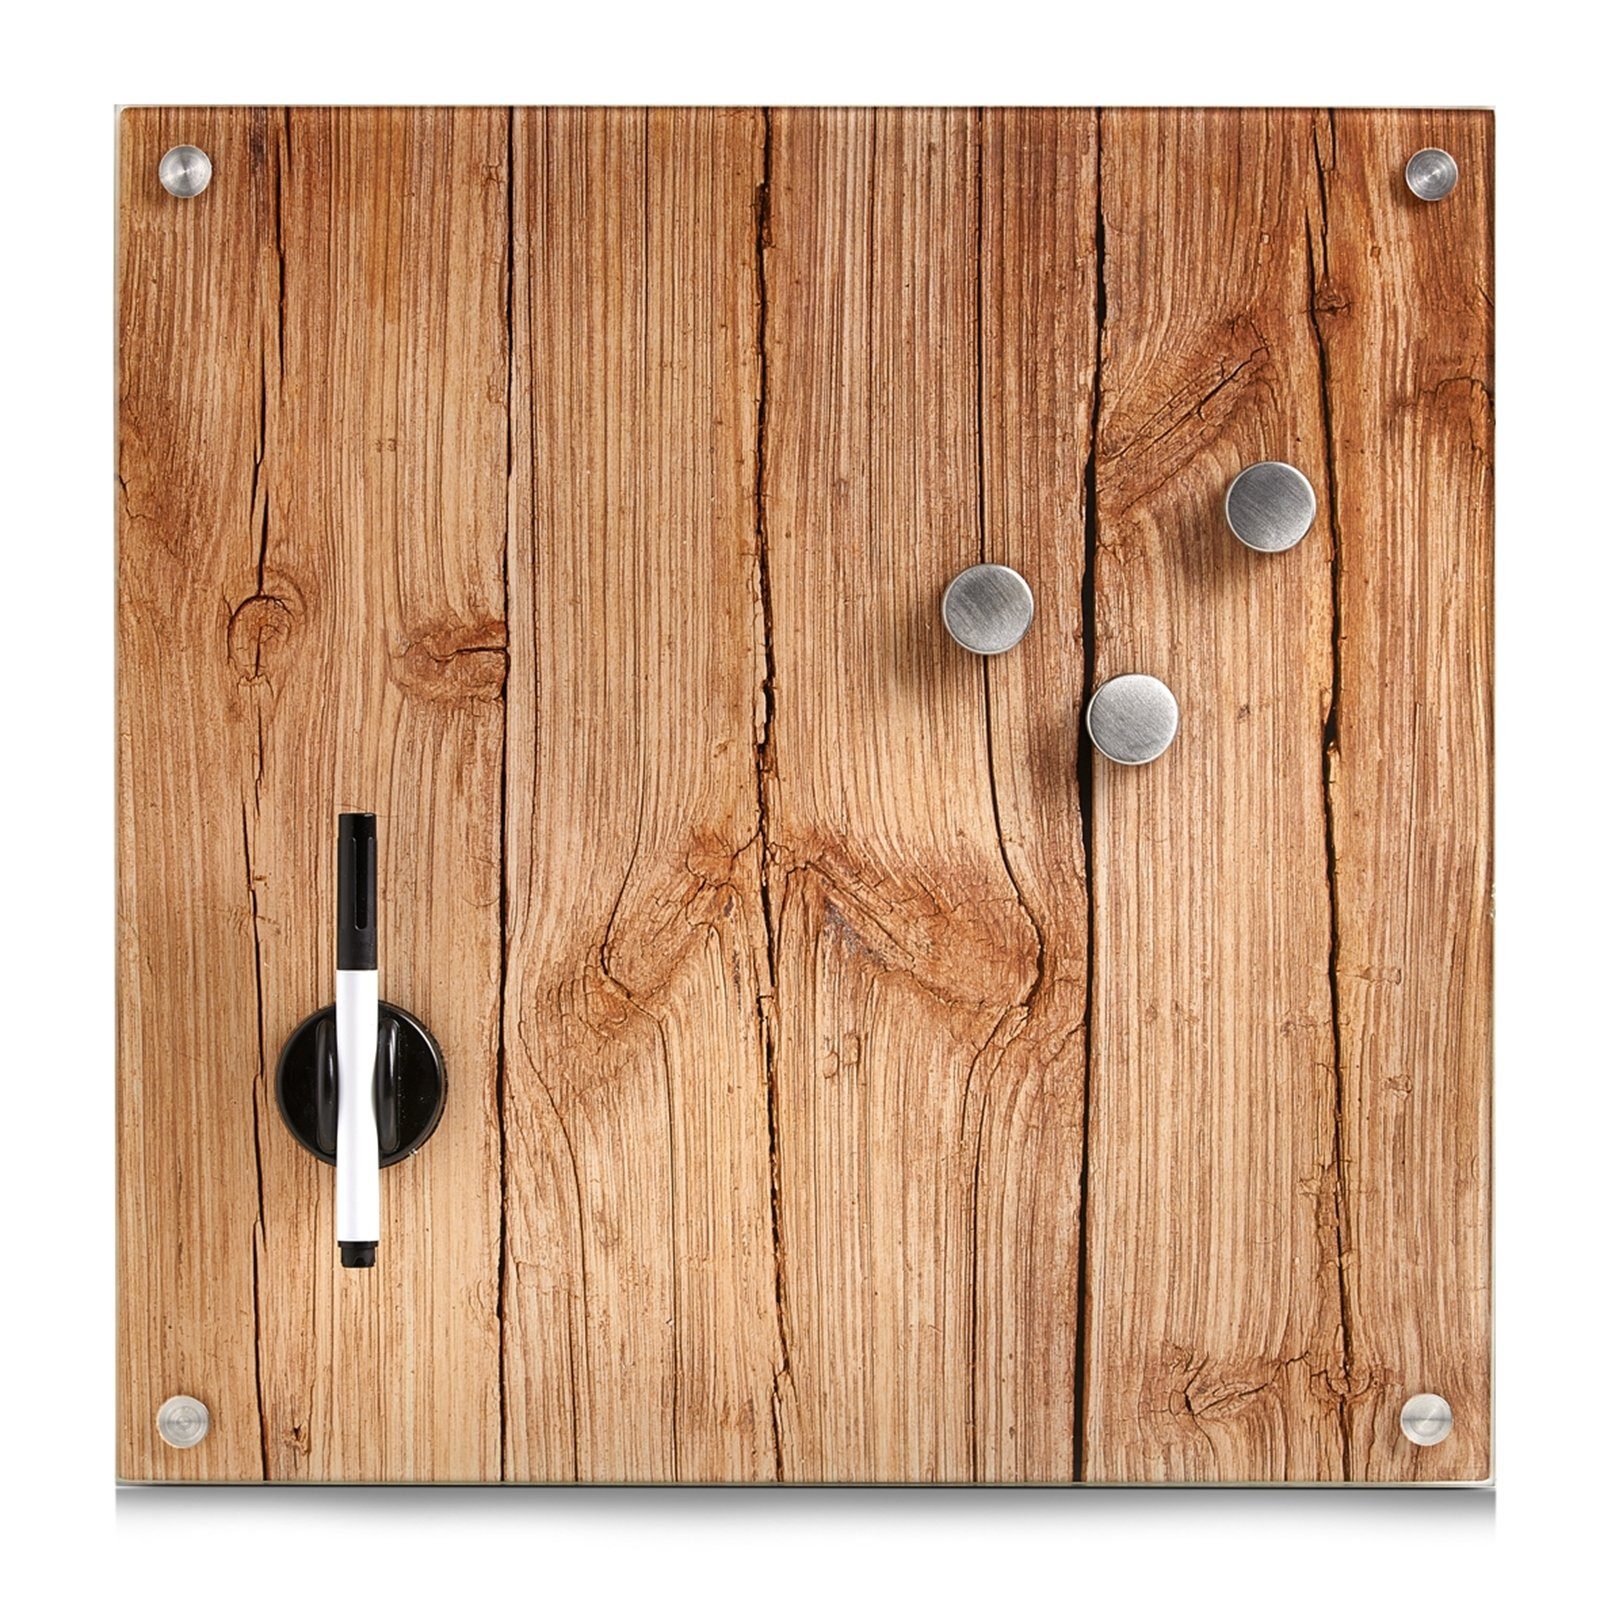 Magnetboard Memoboard Memoboard Magnettafel HTI-Living Wood, Schreibboard Schreibtafel Pinnwand Glas